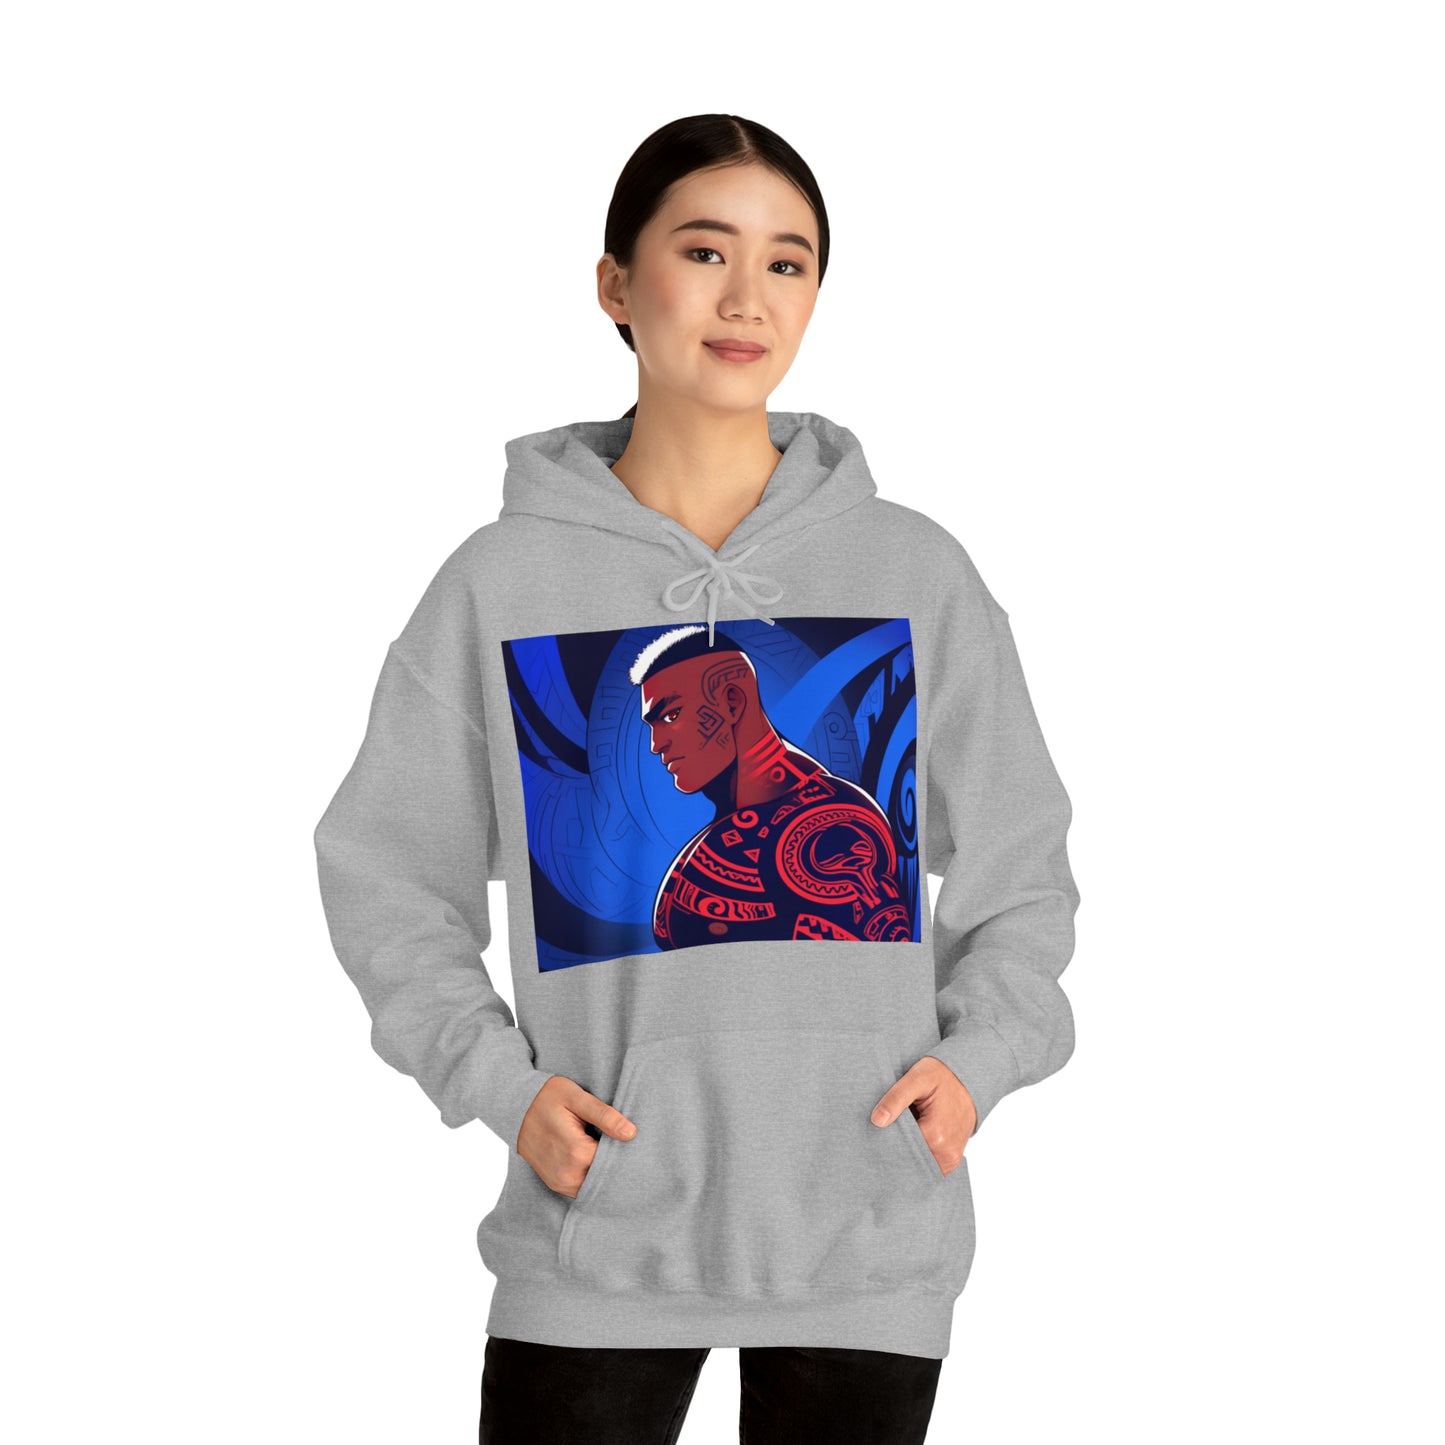 Samoa - light hoodies